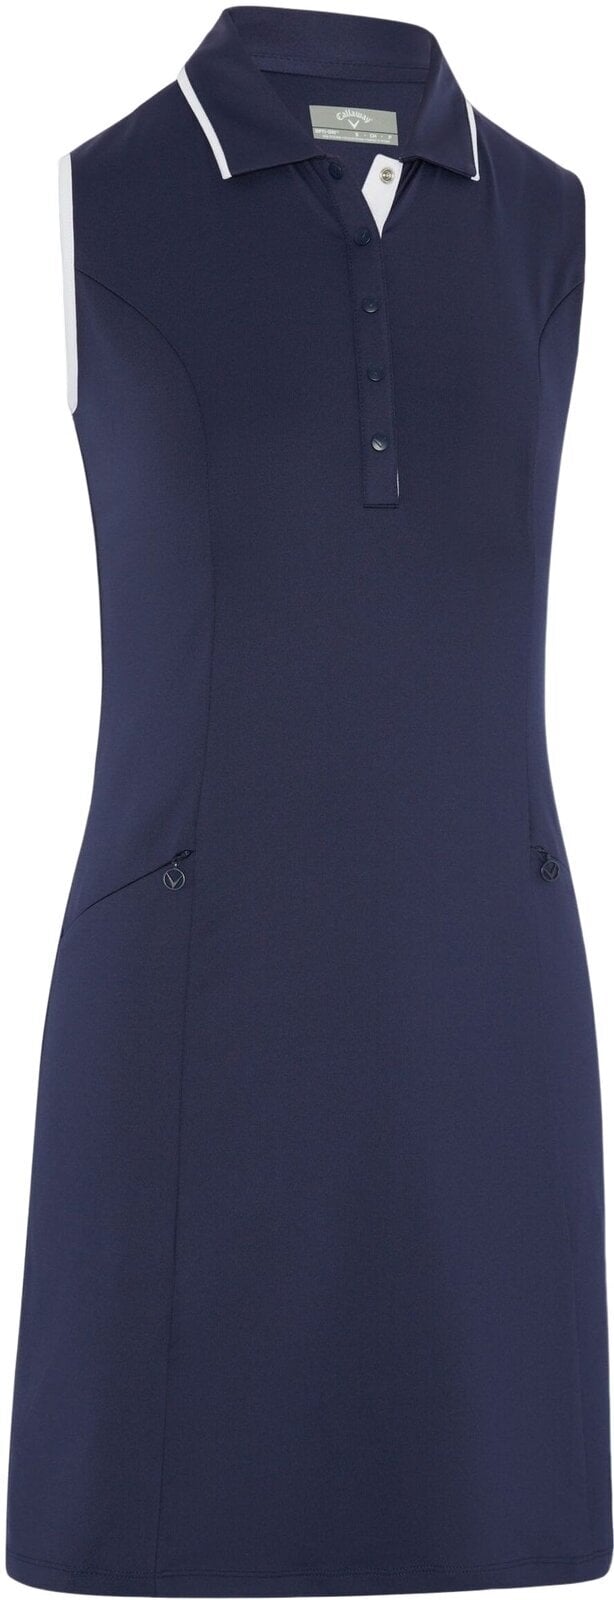 Gonne e vestiti Callaway Womens Sleeveless Dress With Snap Placket Peacoat XL